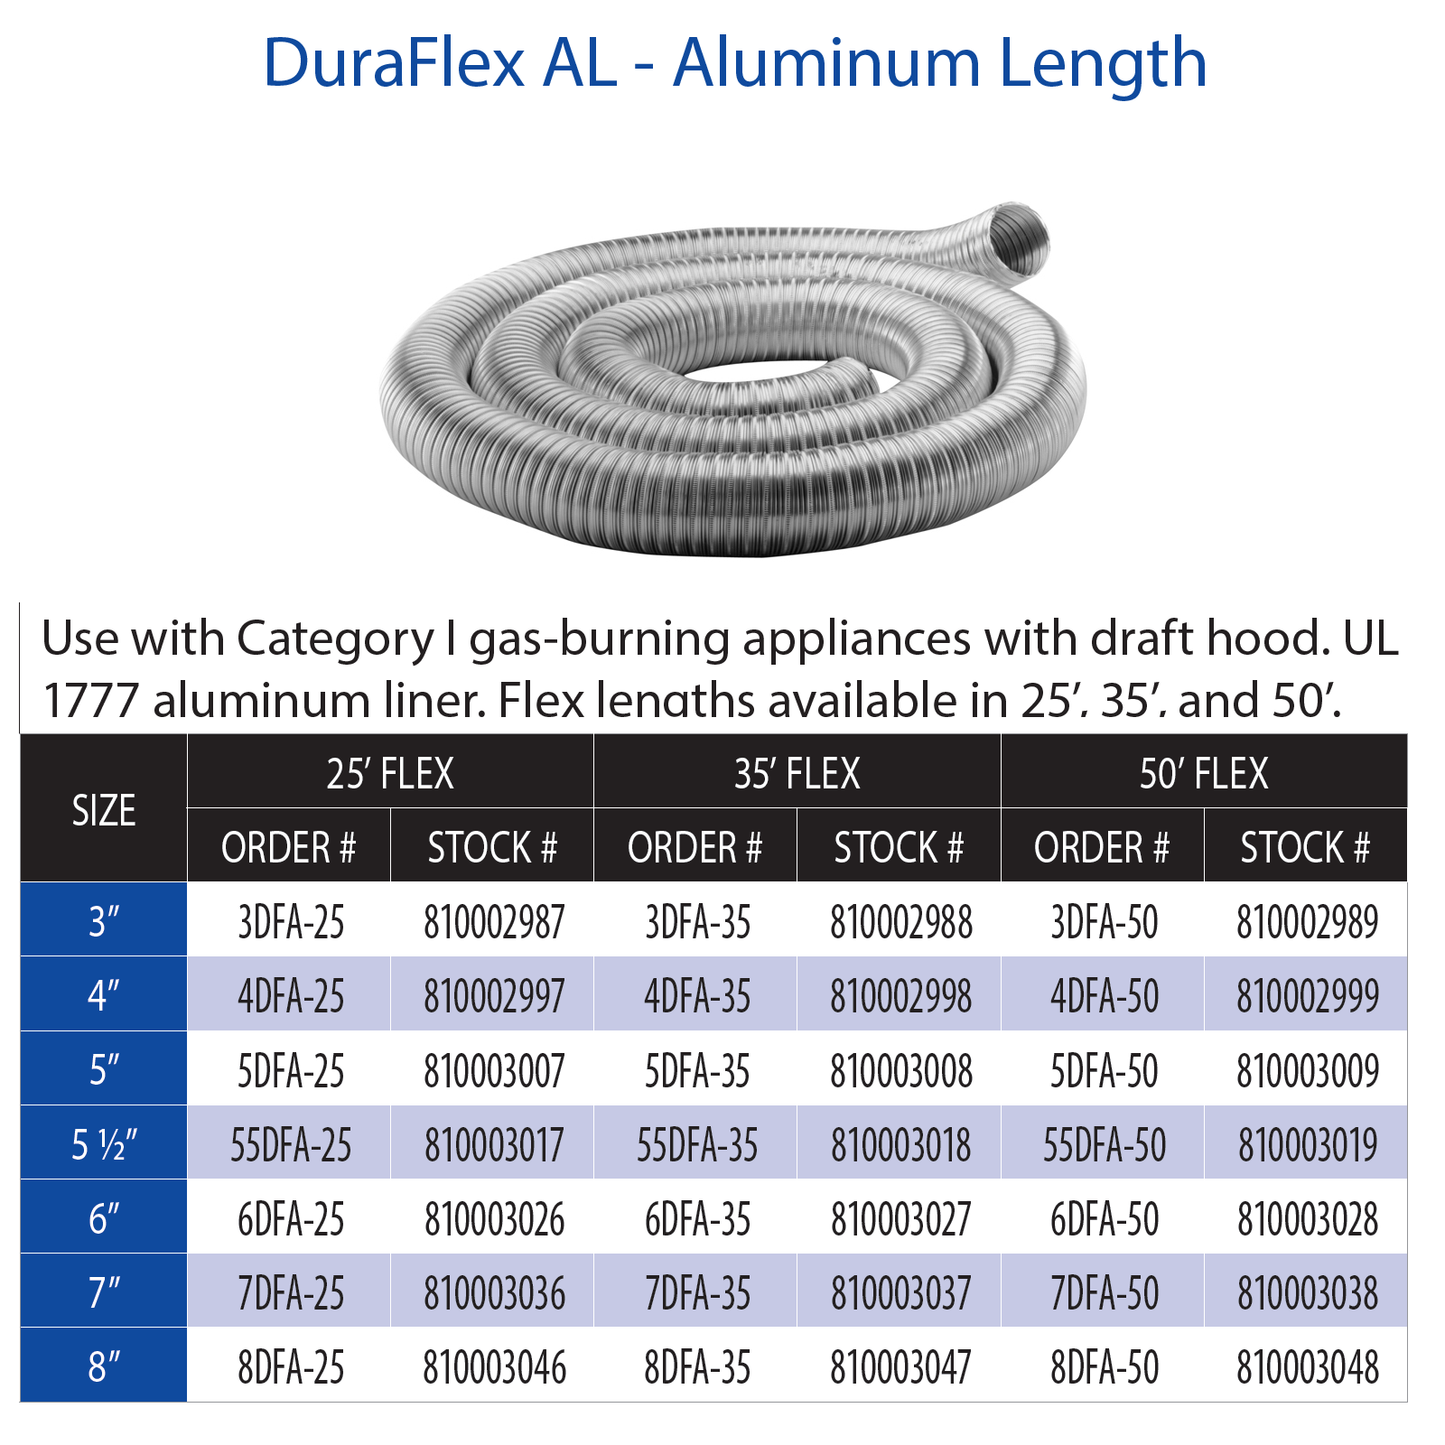 DuraVent DirectVent Pro Aluminum Flex Length 4 Inch x 25' | 4DFA-25